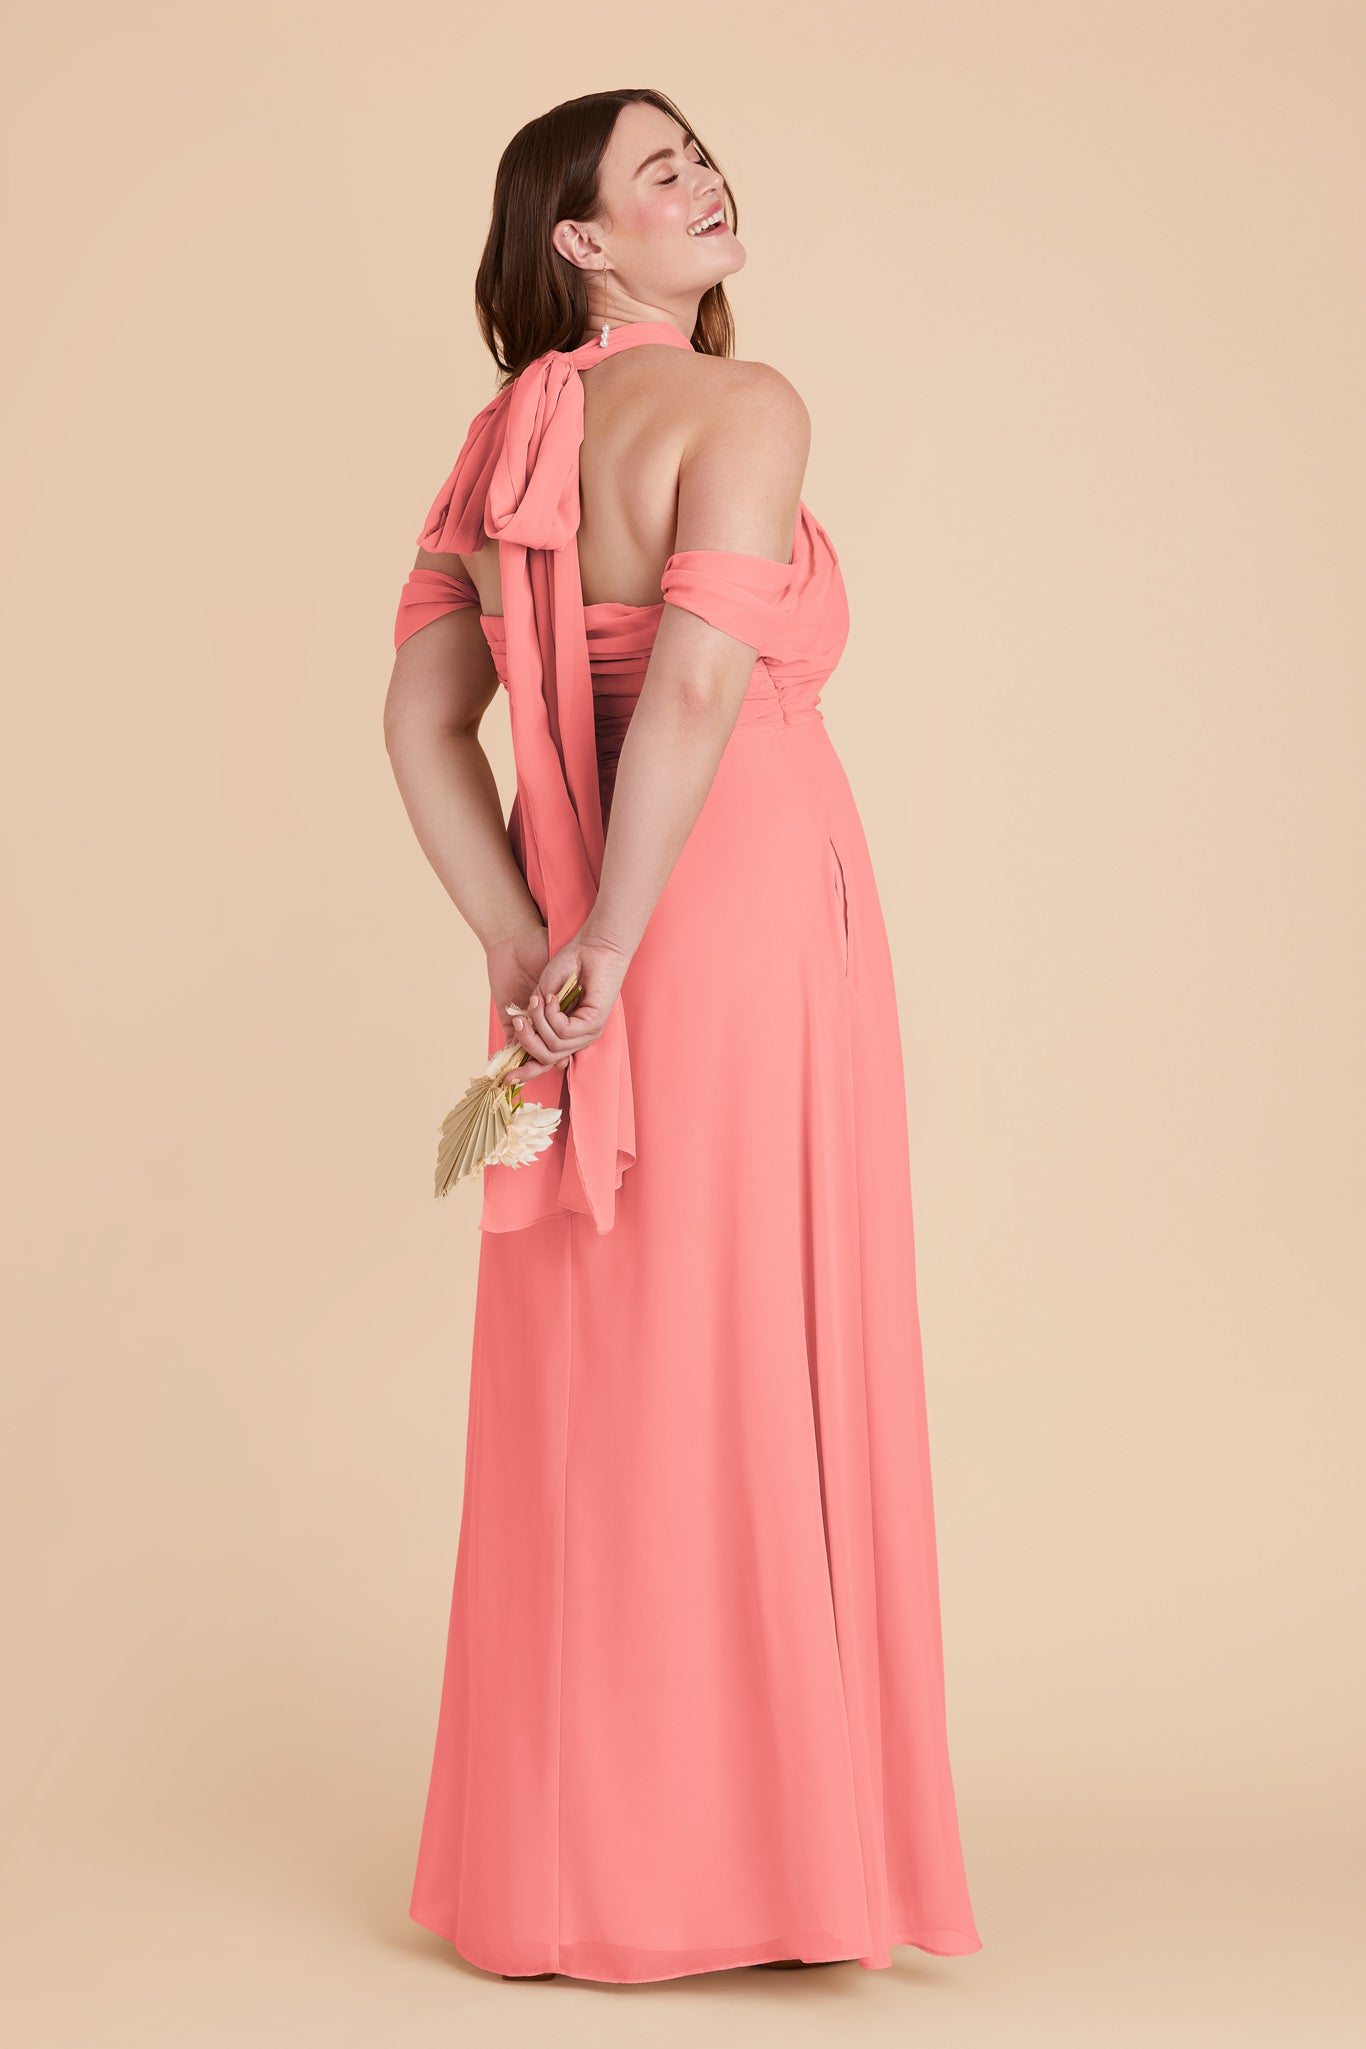 Coral Pink Cara Chiffon Dress by Birdy Grey